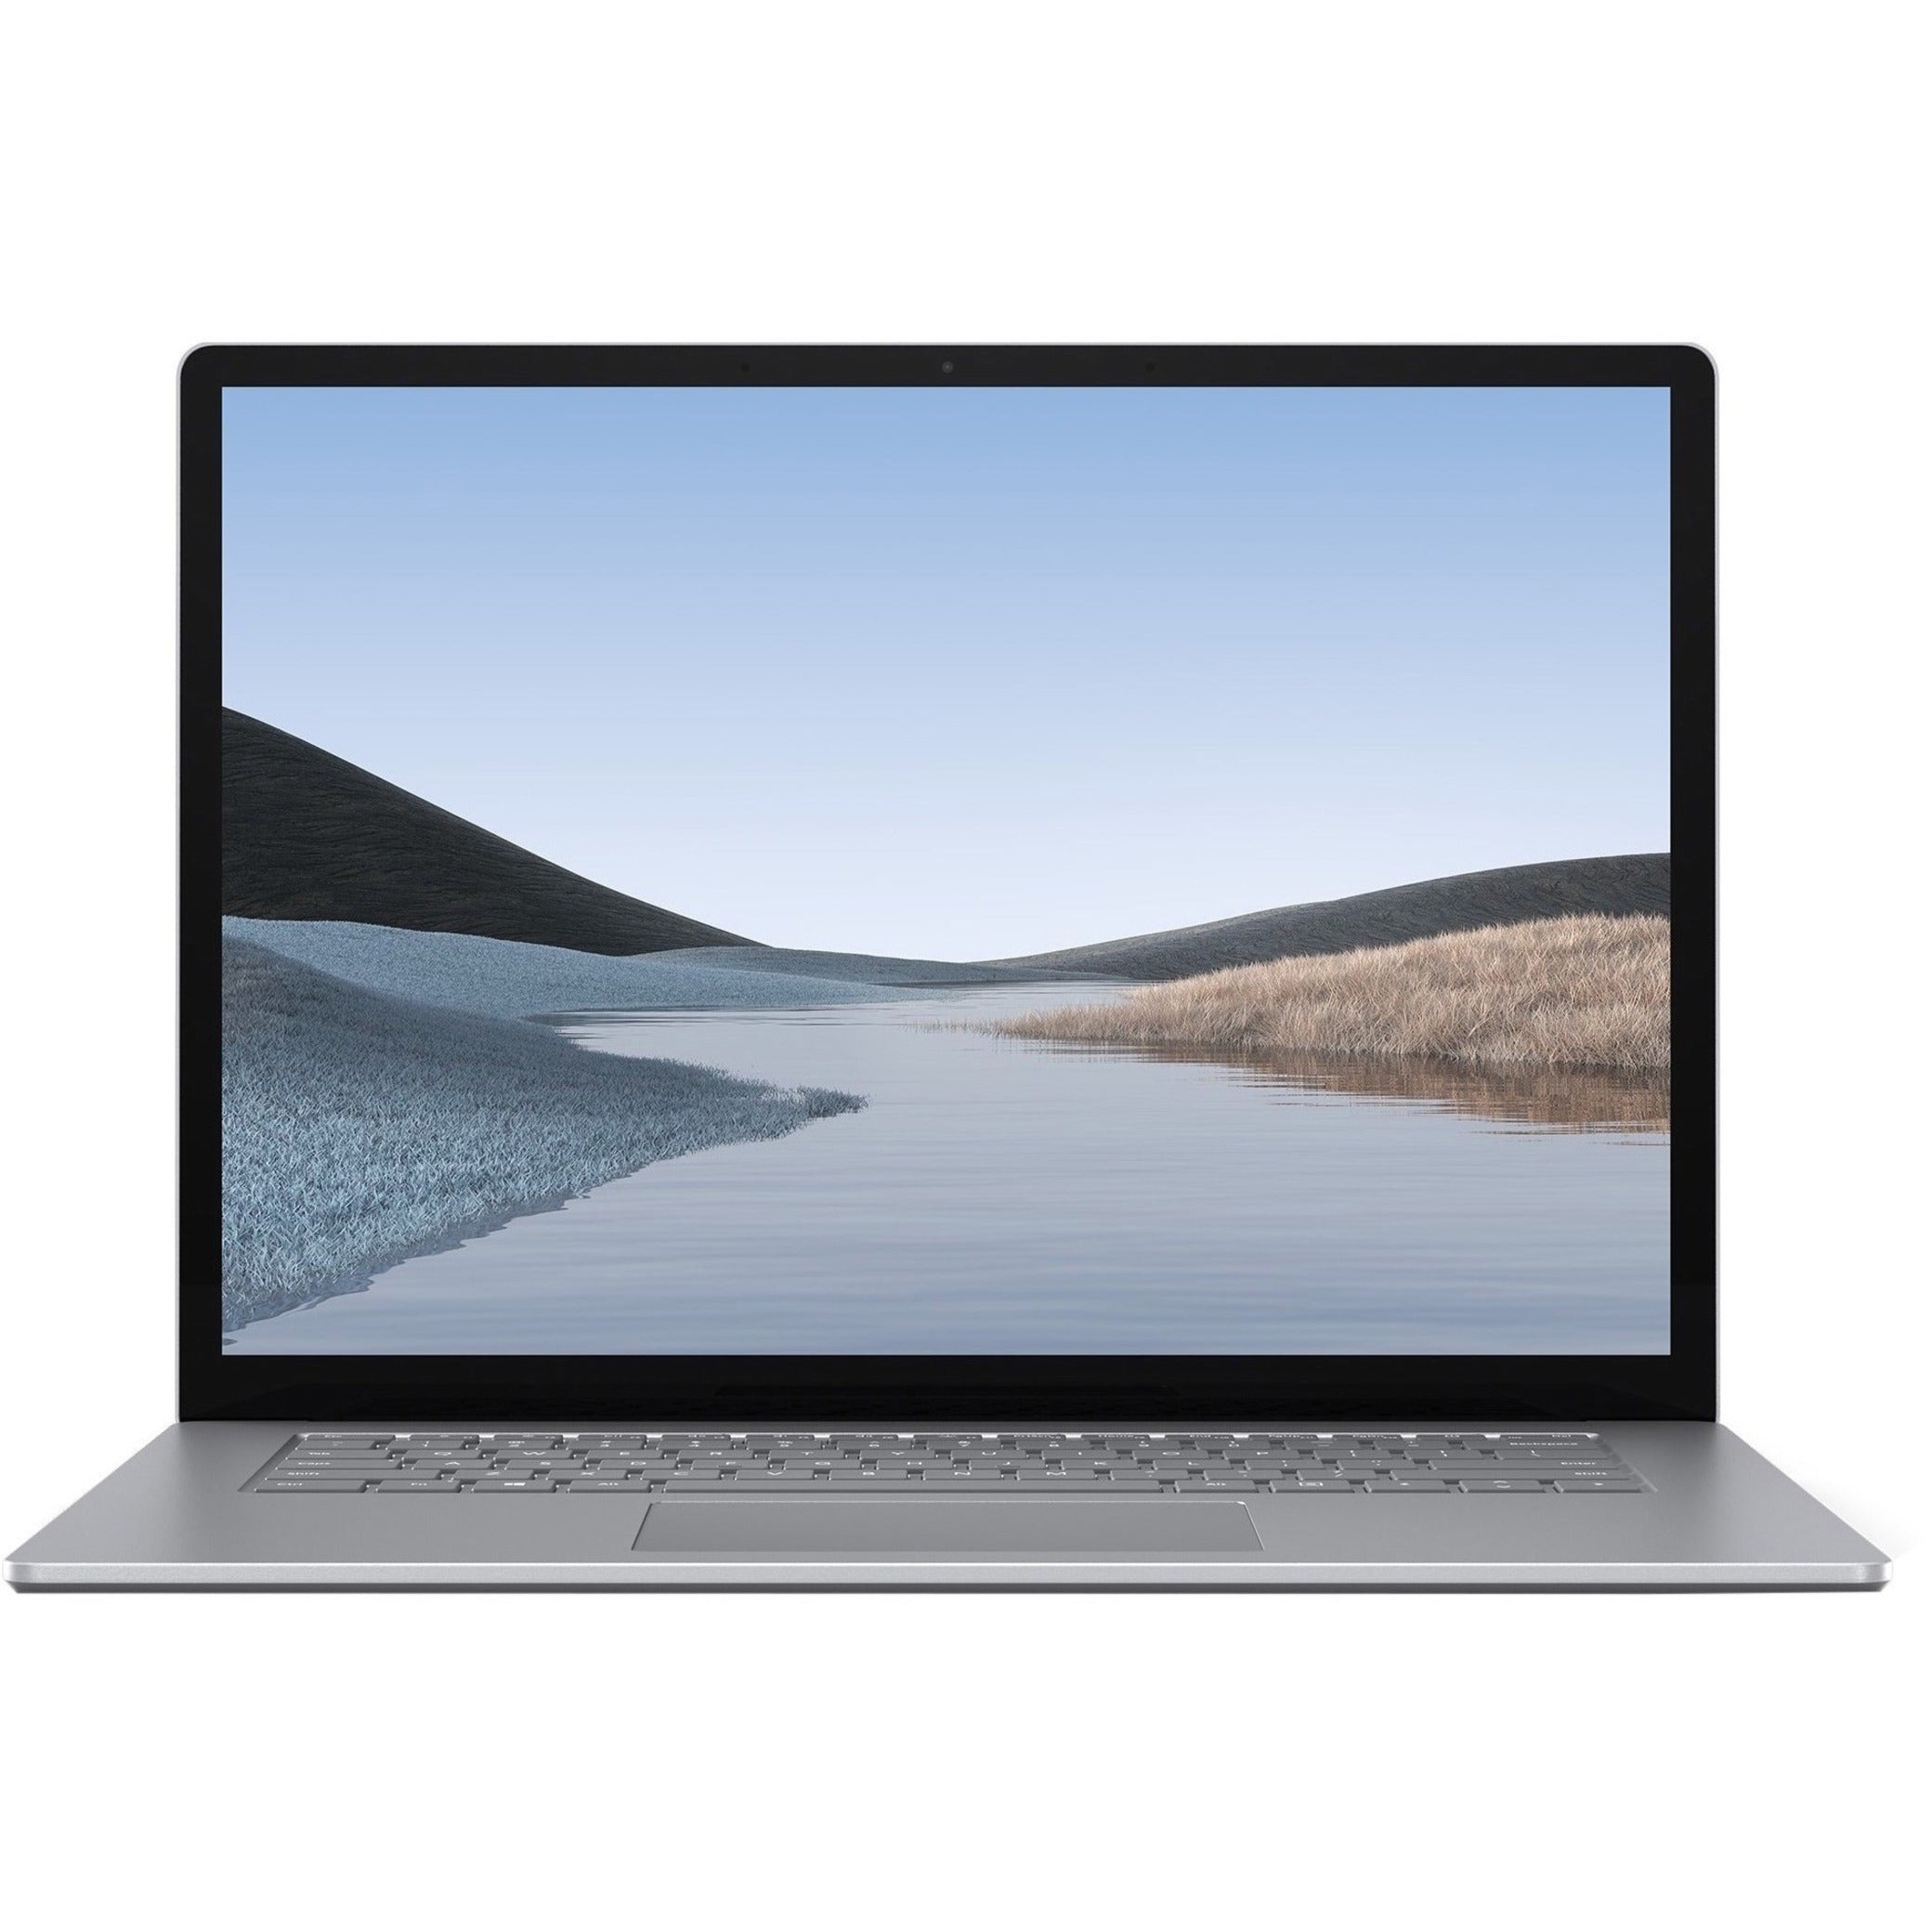 Microsoft RE4-00001 Surface Laptop 3 Notebook, 13.5 QHD Touchscreen, Core i5, 8GB RAM, 256GB SSD, Windows 10 Pro